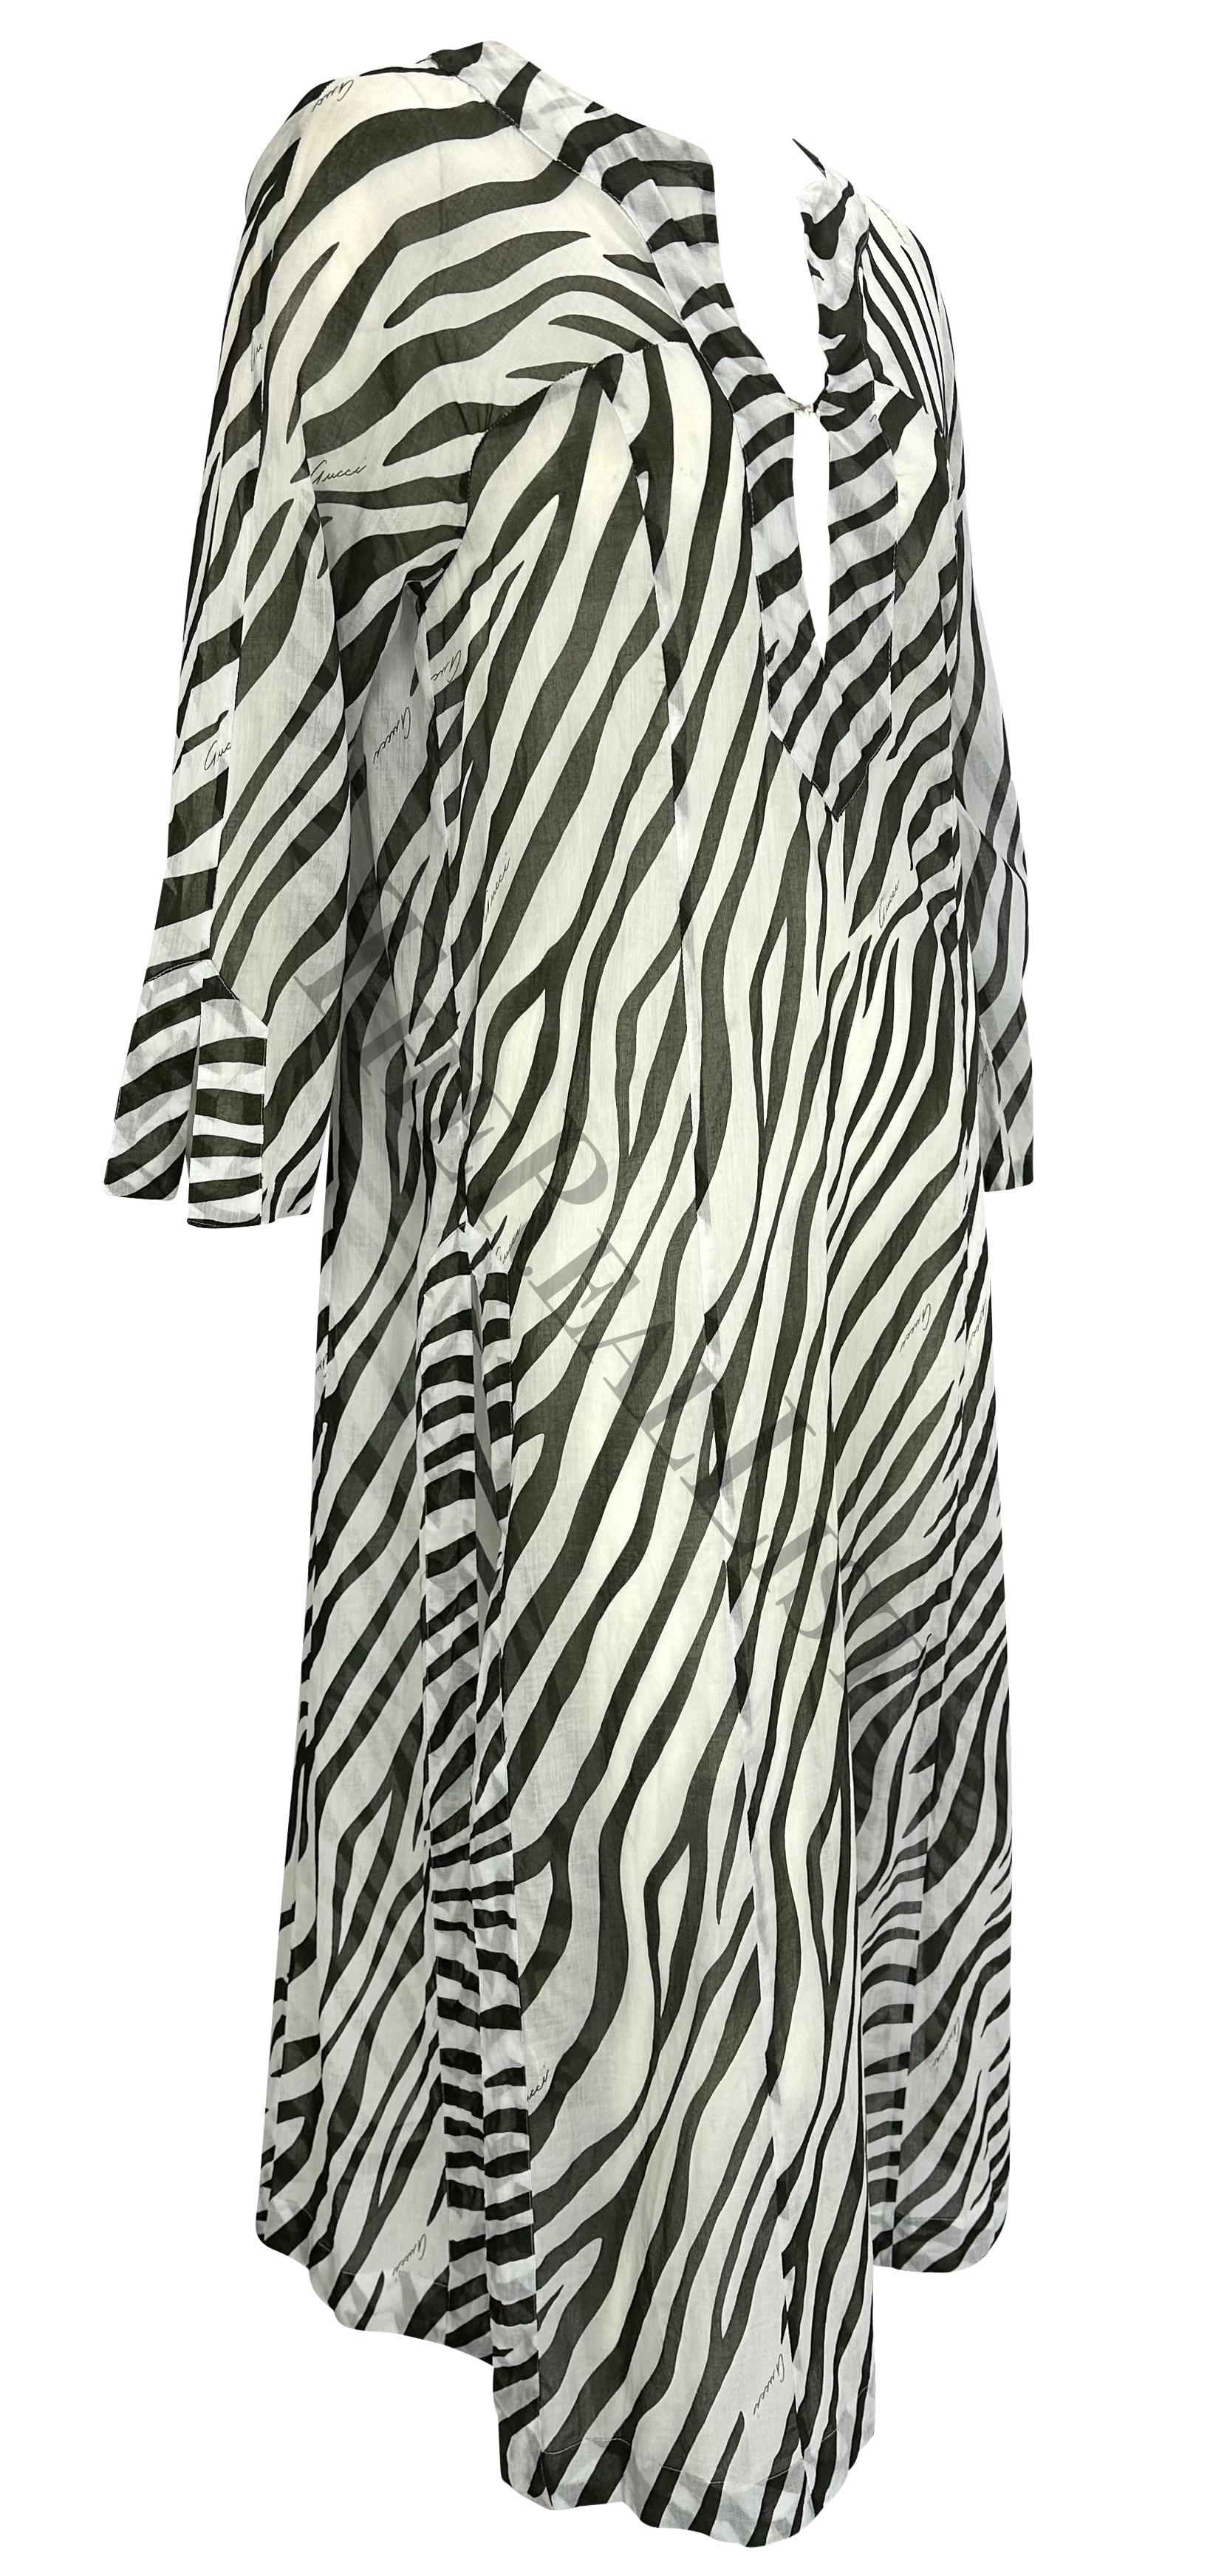 S/S 1996 Gucci by Tom Ford Runway Black White Zebra Print Sheer Kaftan Dress For Sale 6